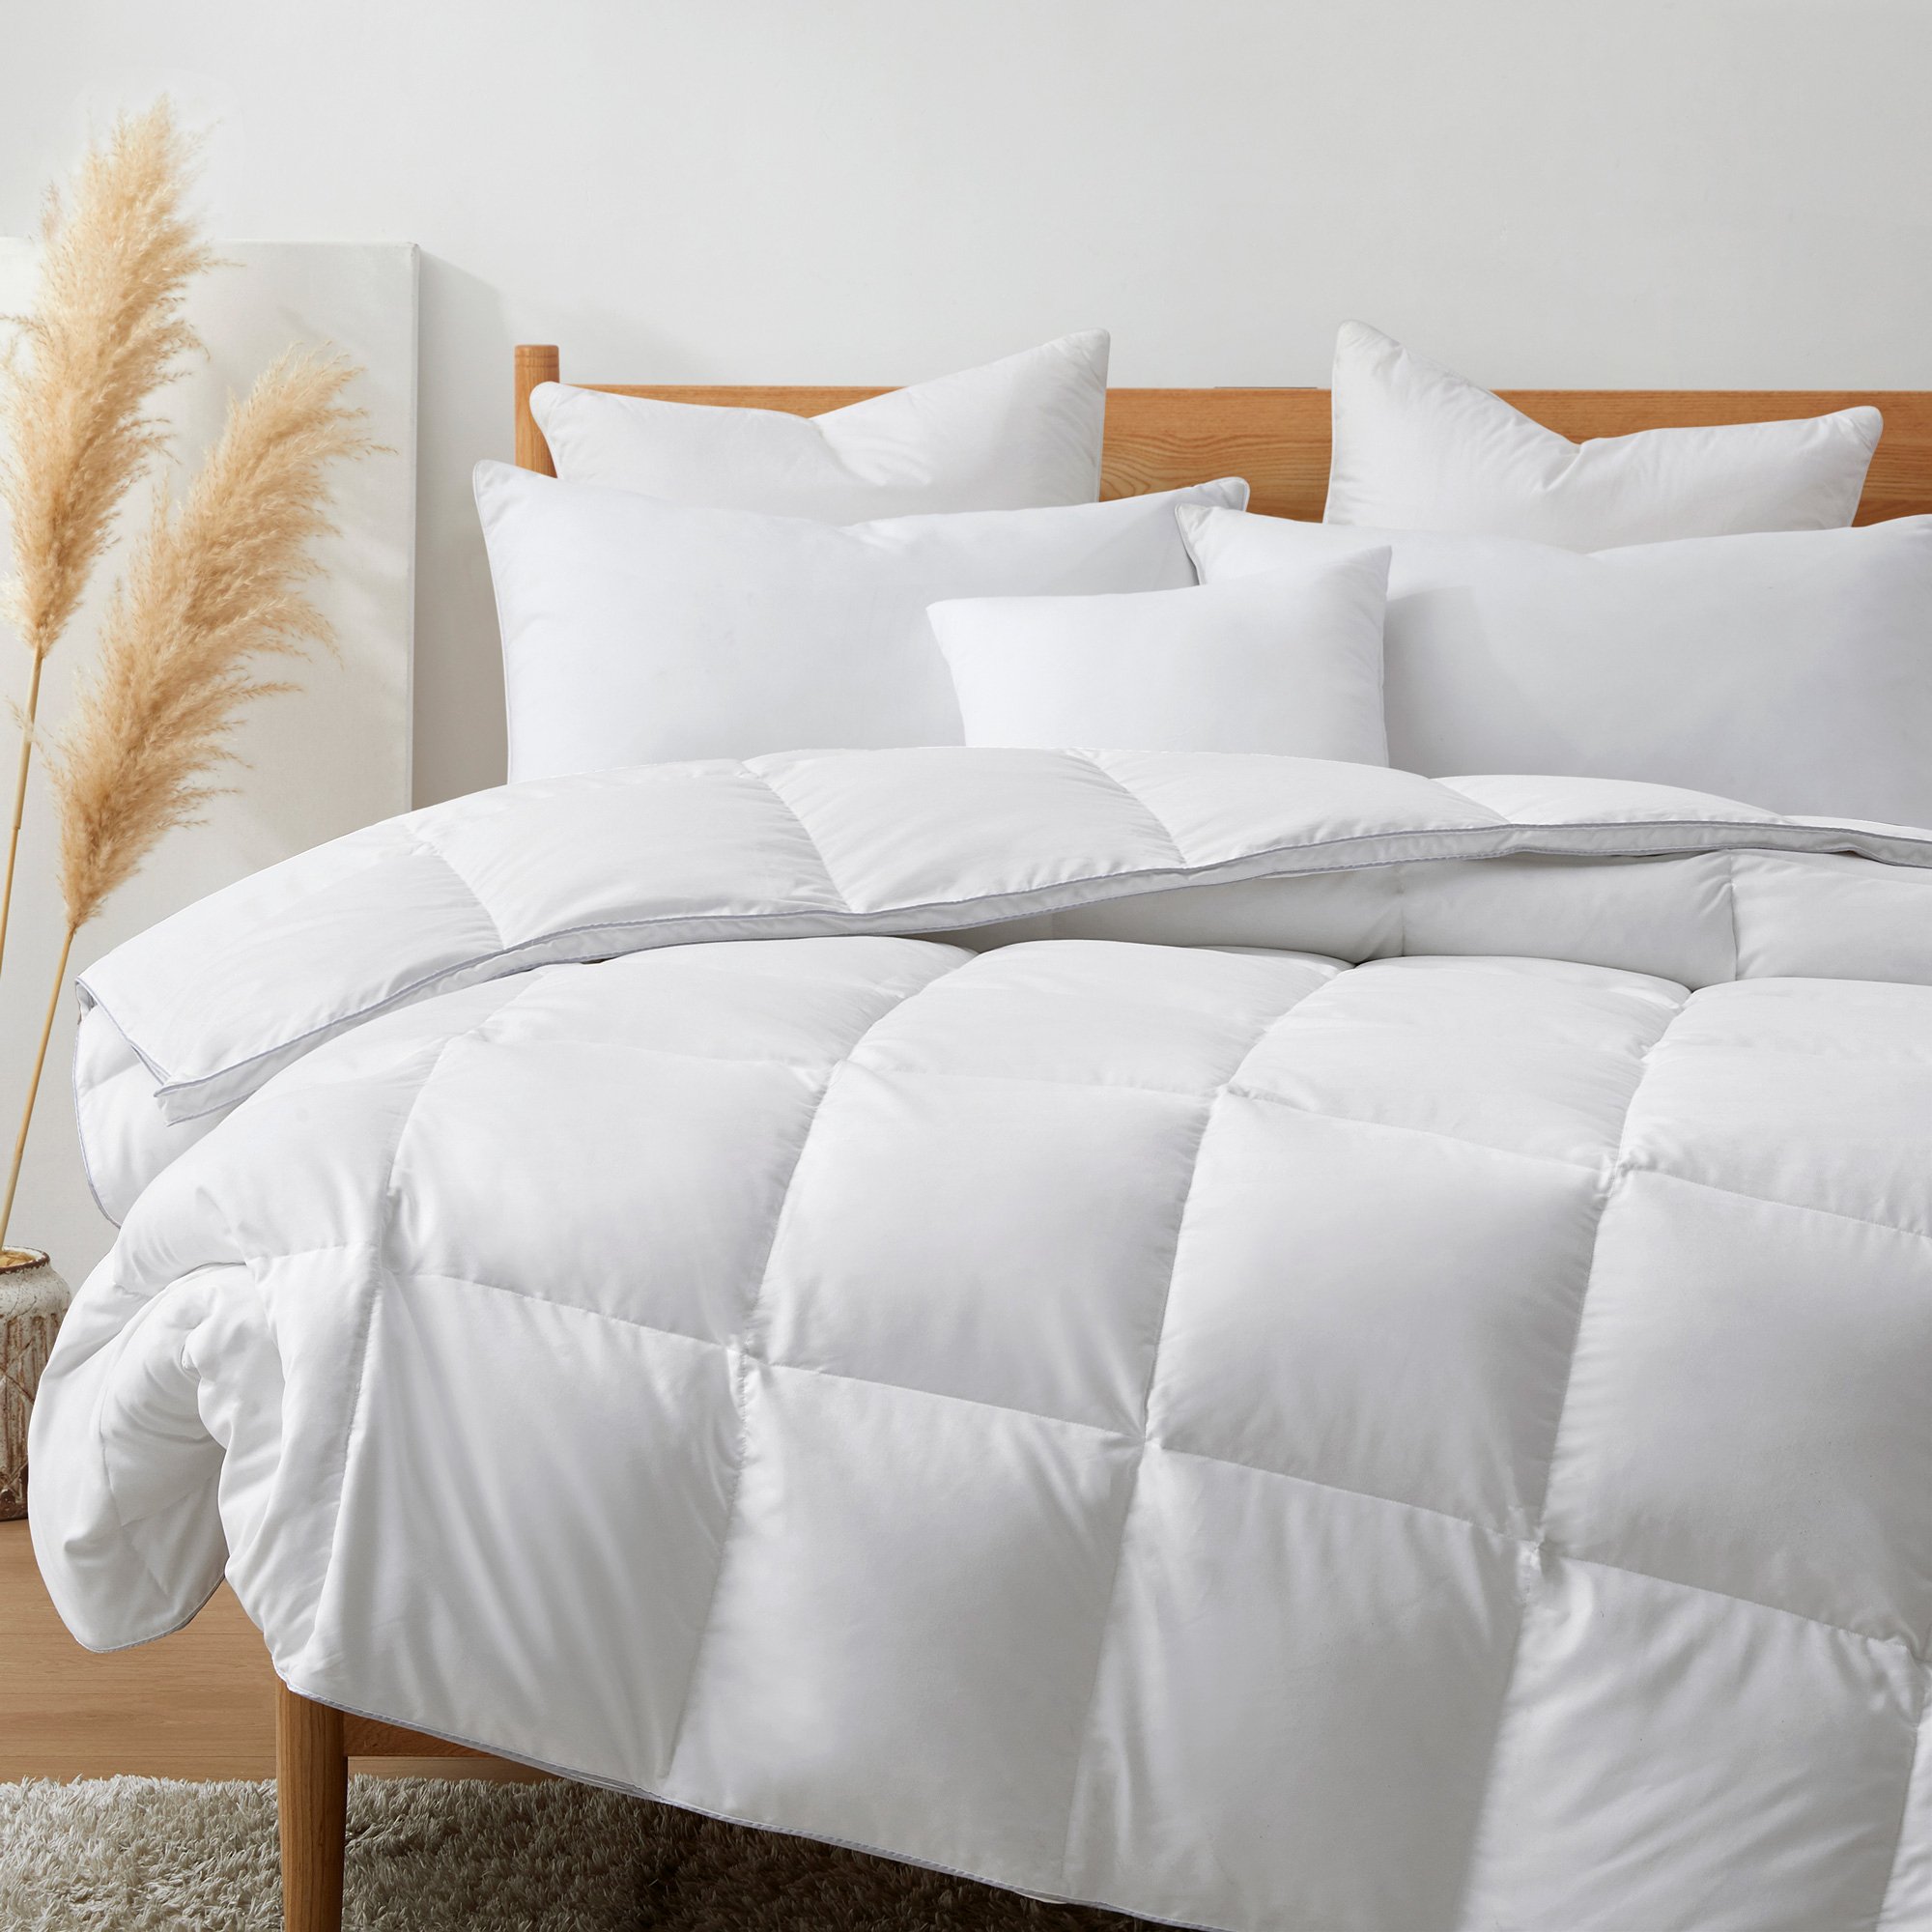 Ultimate Luxury Bedding Bundle: All Season Goose Down Comforter, 2 Pack Gusset Pillows, And Faux Linen Duvet Cover Set - White Bundles Optio